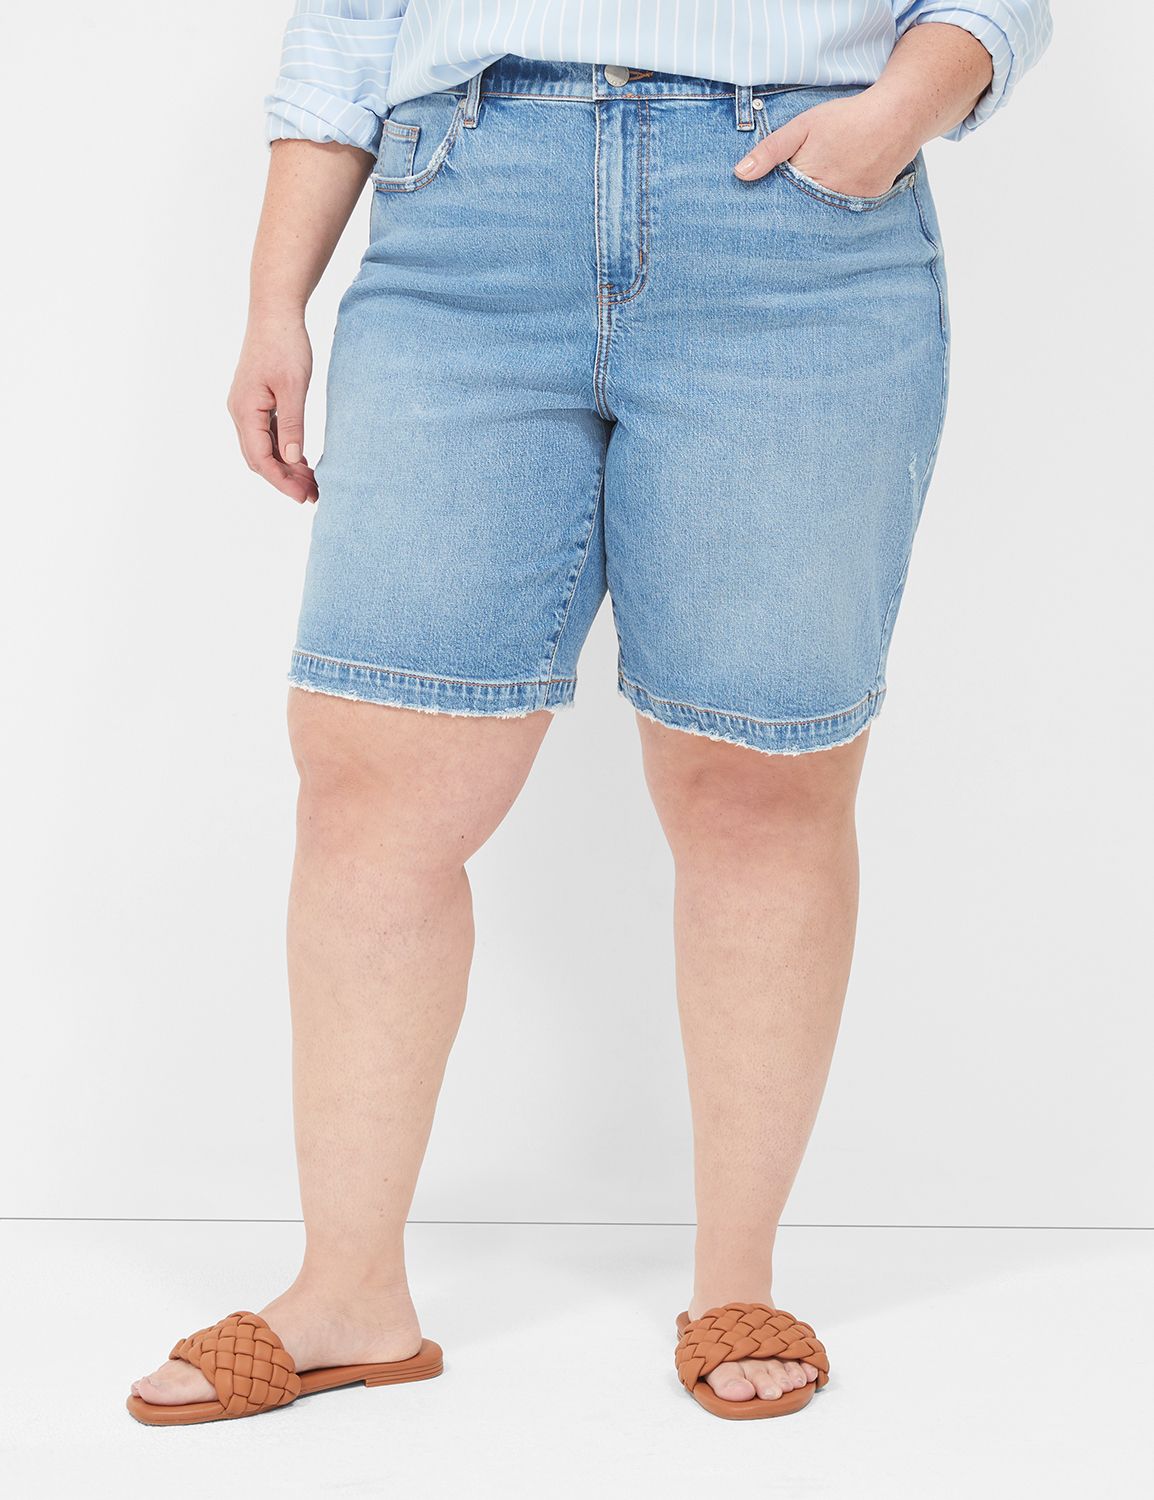 Women Ladies Fashionize Plus Size Lace Denim Capri Leggings Casual Faux Denim  Jean 3/4 Pants